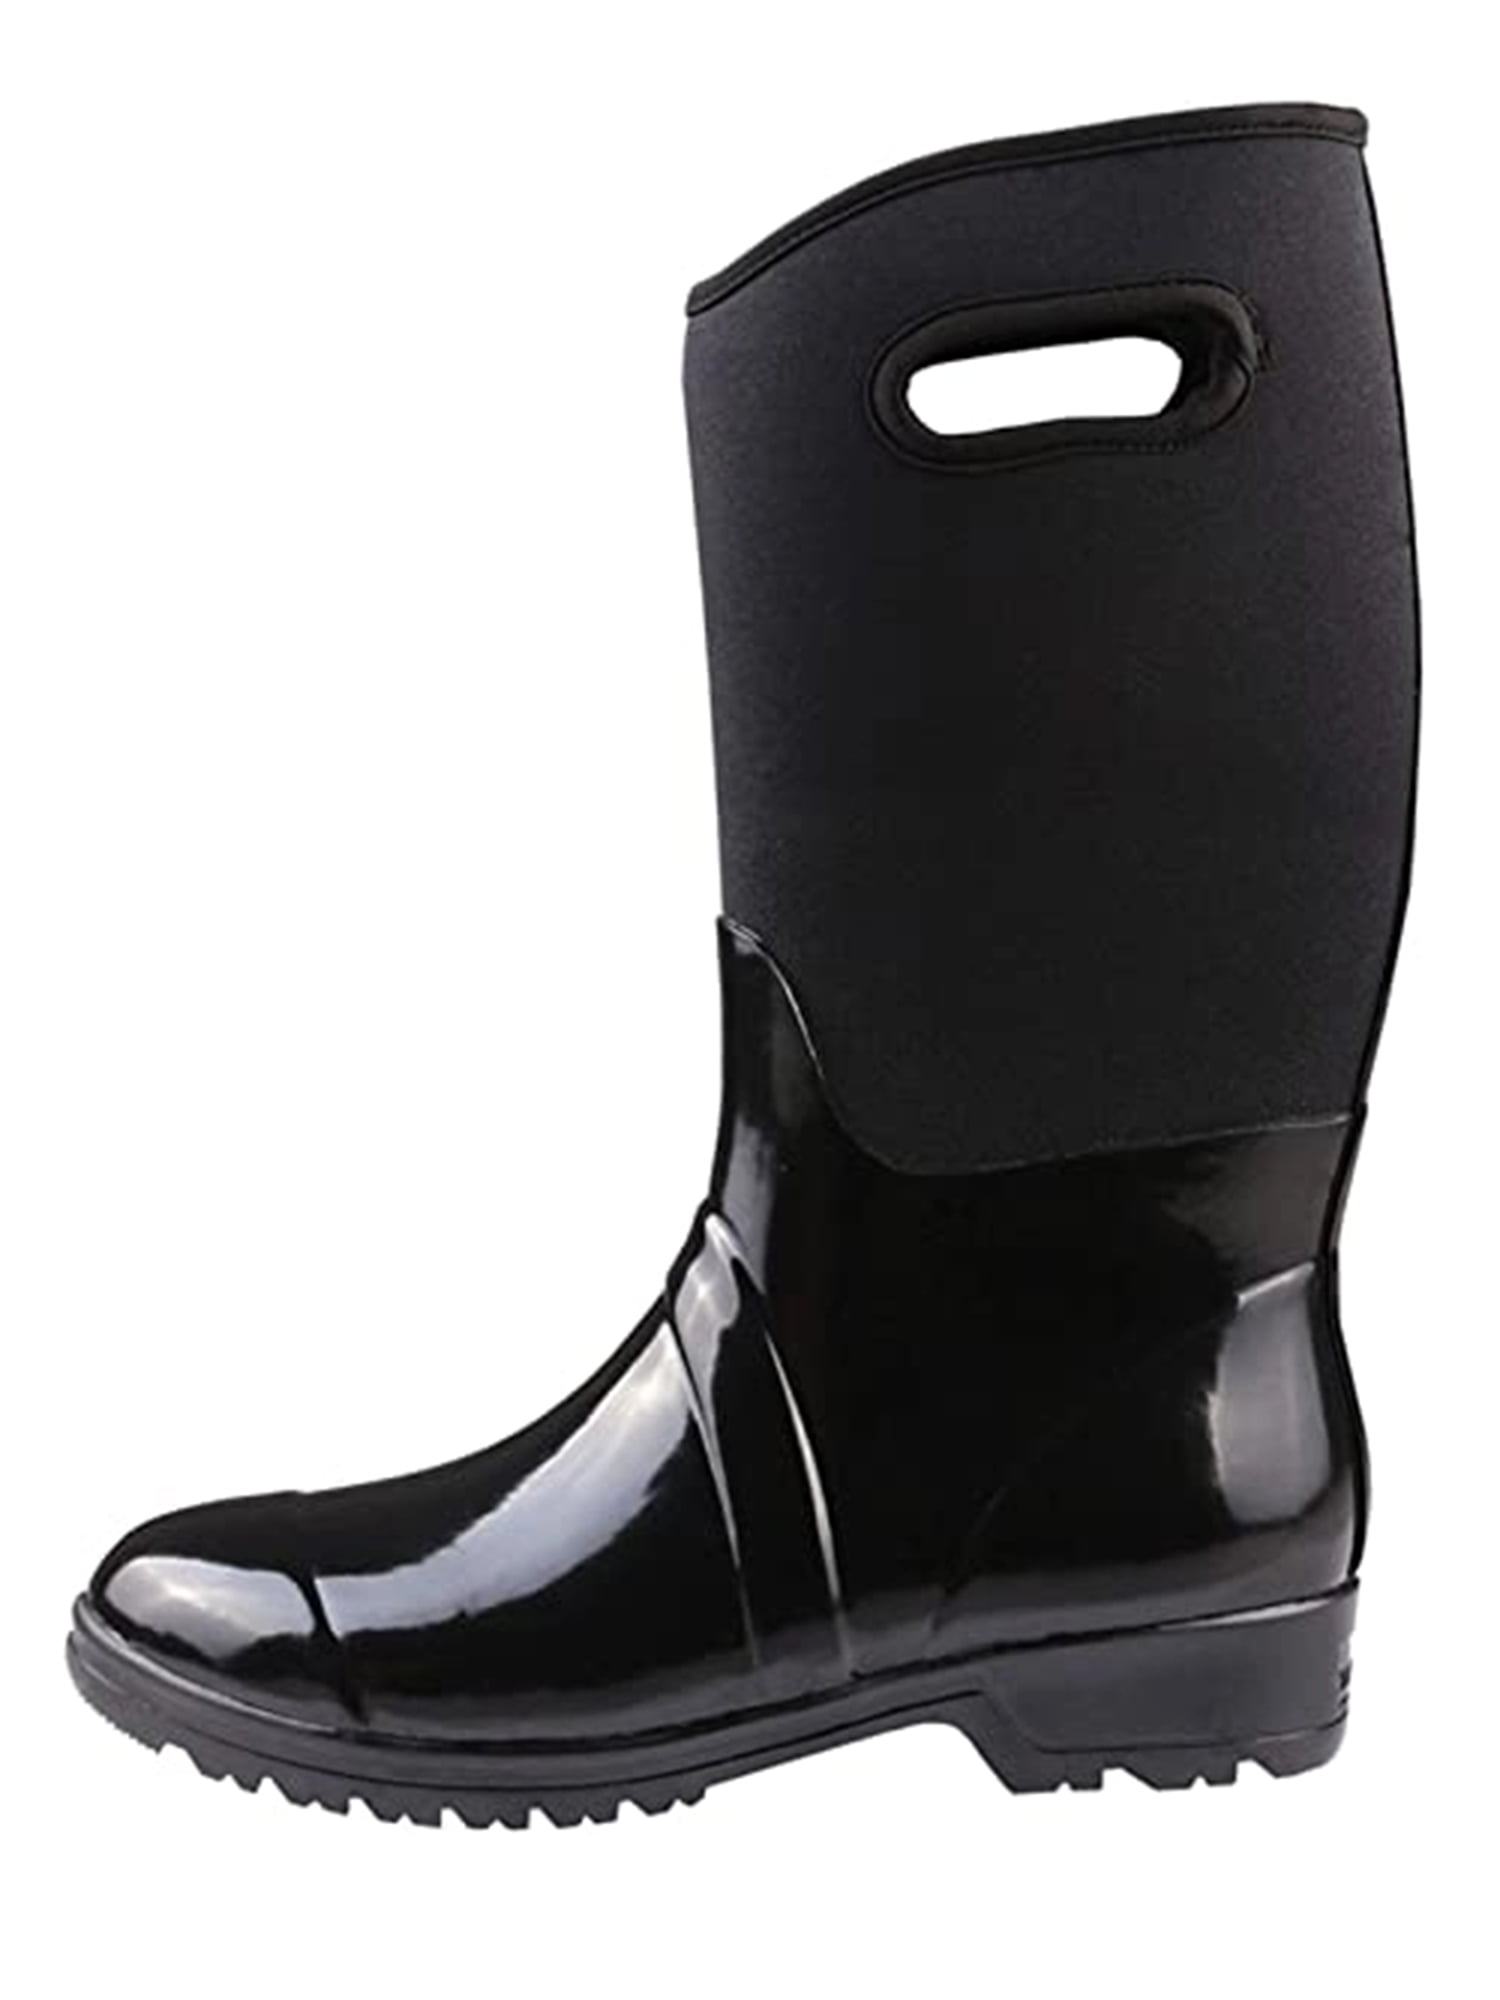 Tanleewa - Slip-Resistant Women Rain Boots Fashion Neoprene Waterproof ...